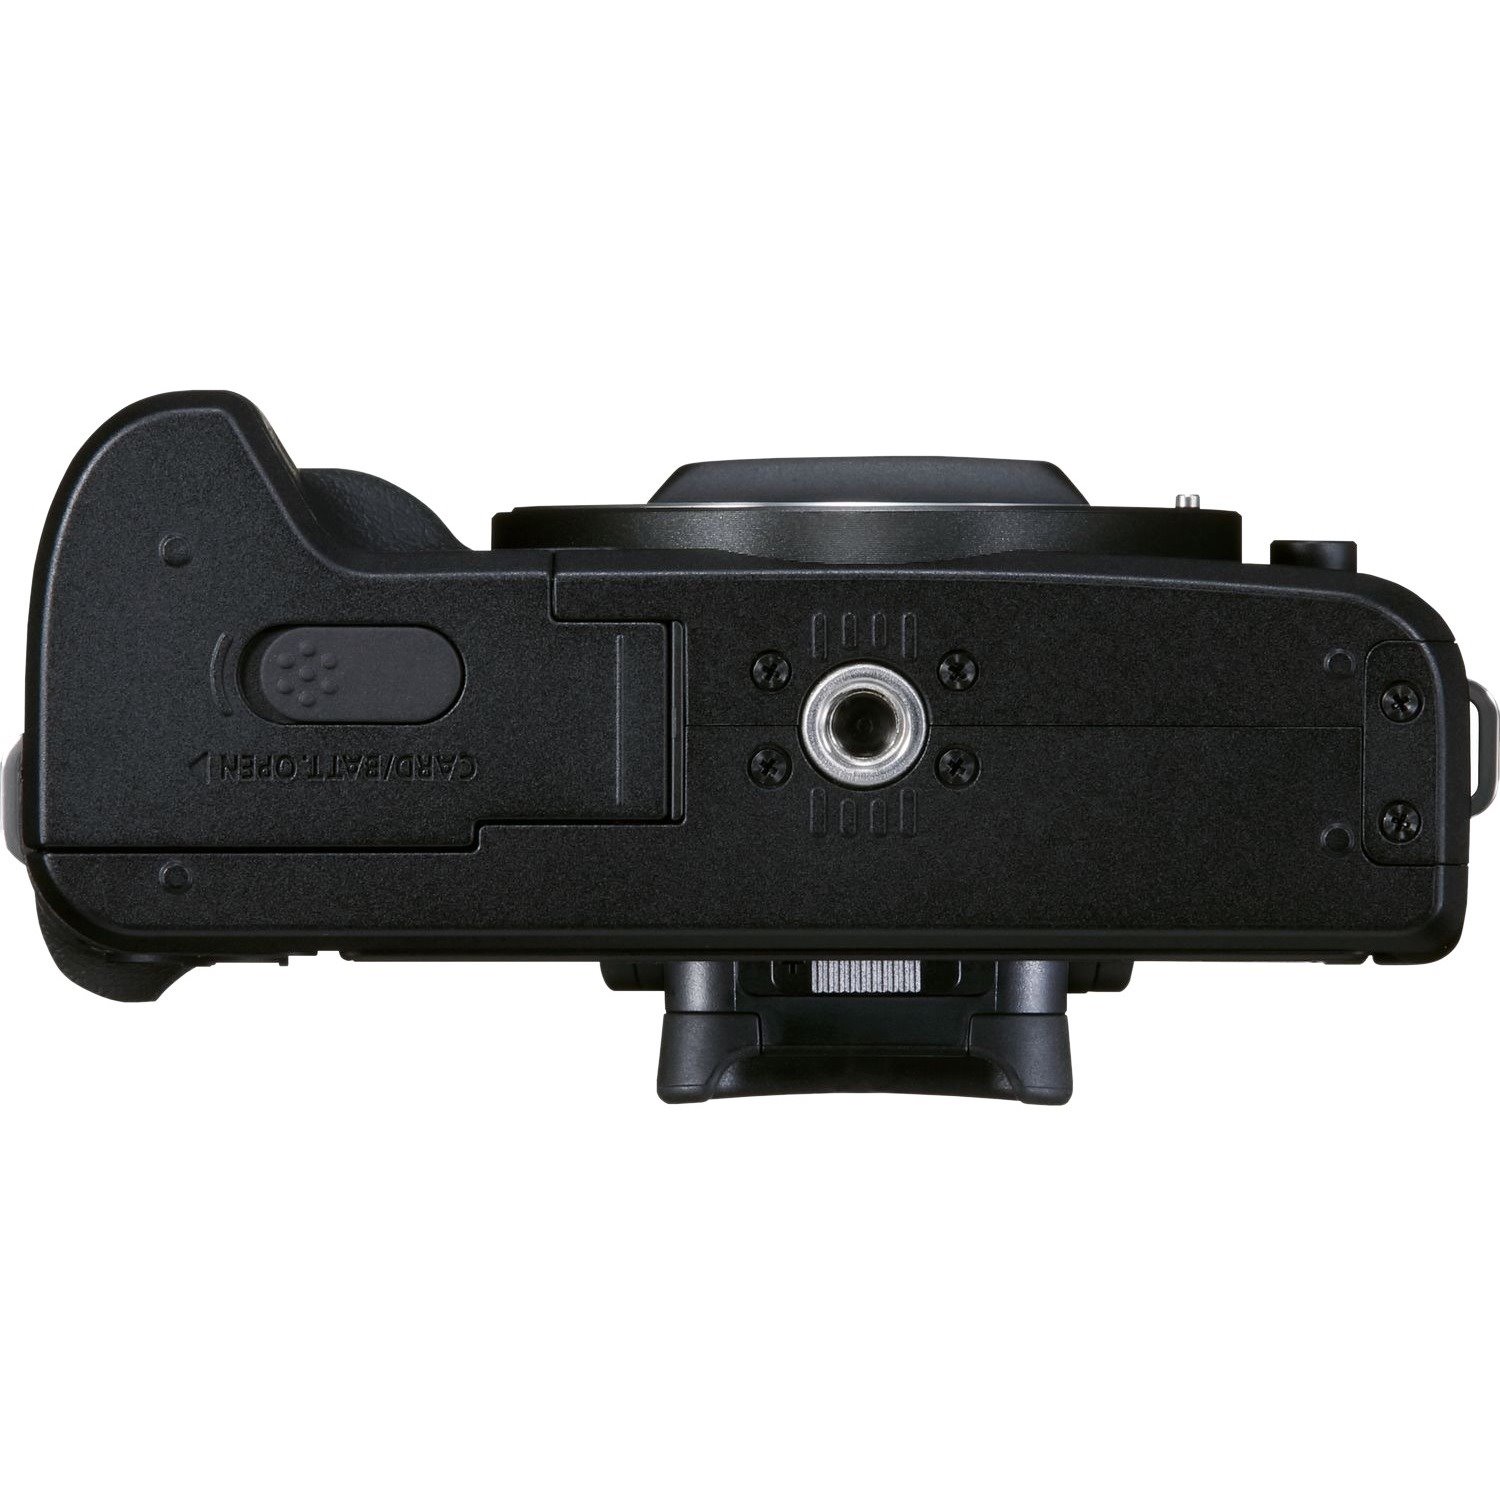 Canon EOS M50 Mark II 24.1 Megapixel Mirrorless Camera with Lens - 0.59" - 1.77" (Lens 1), 2.17" - 7.87" (Lens 2) - Black